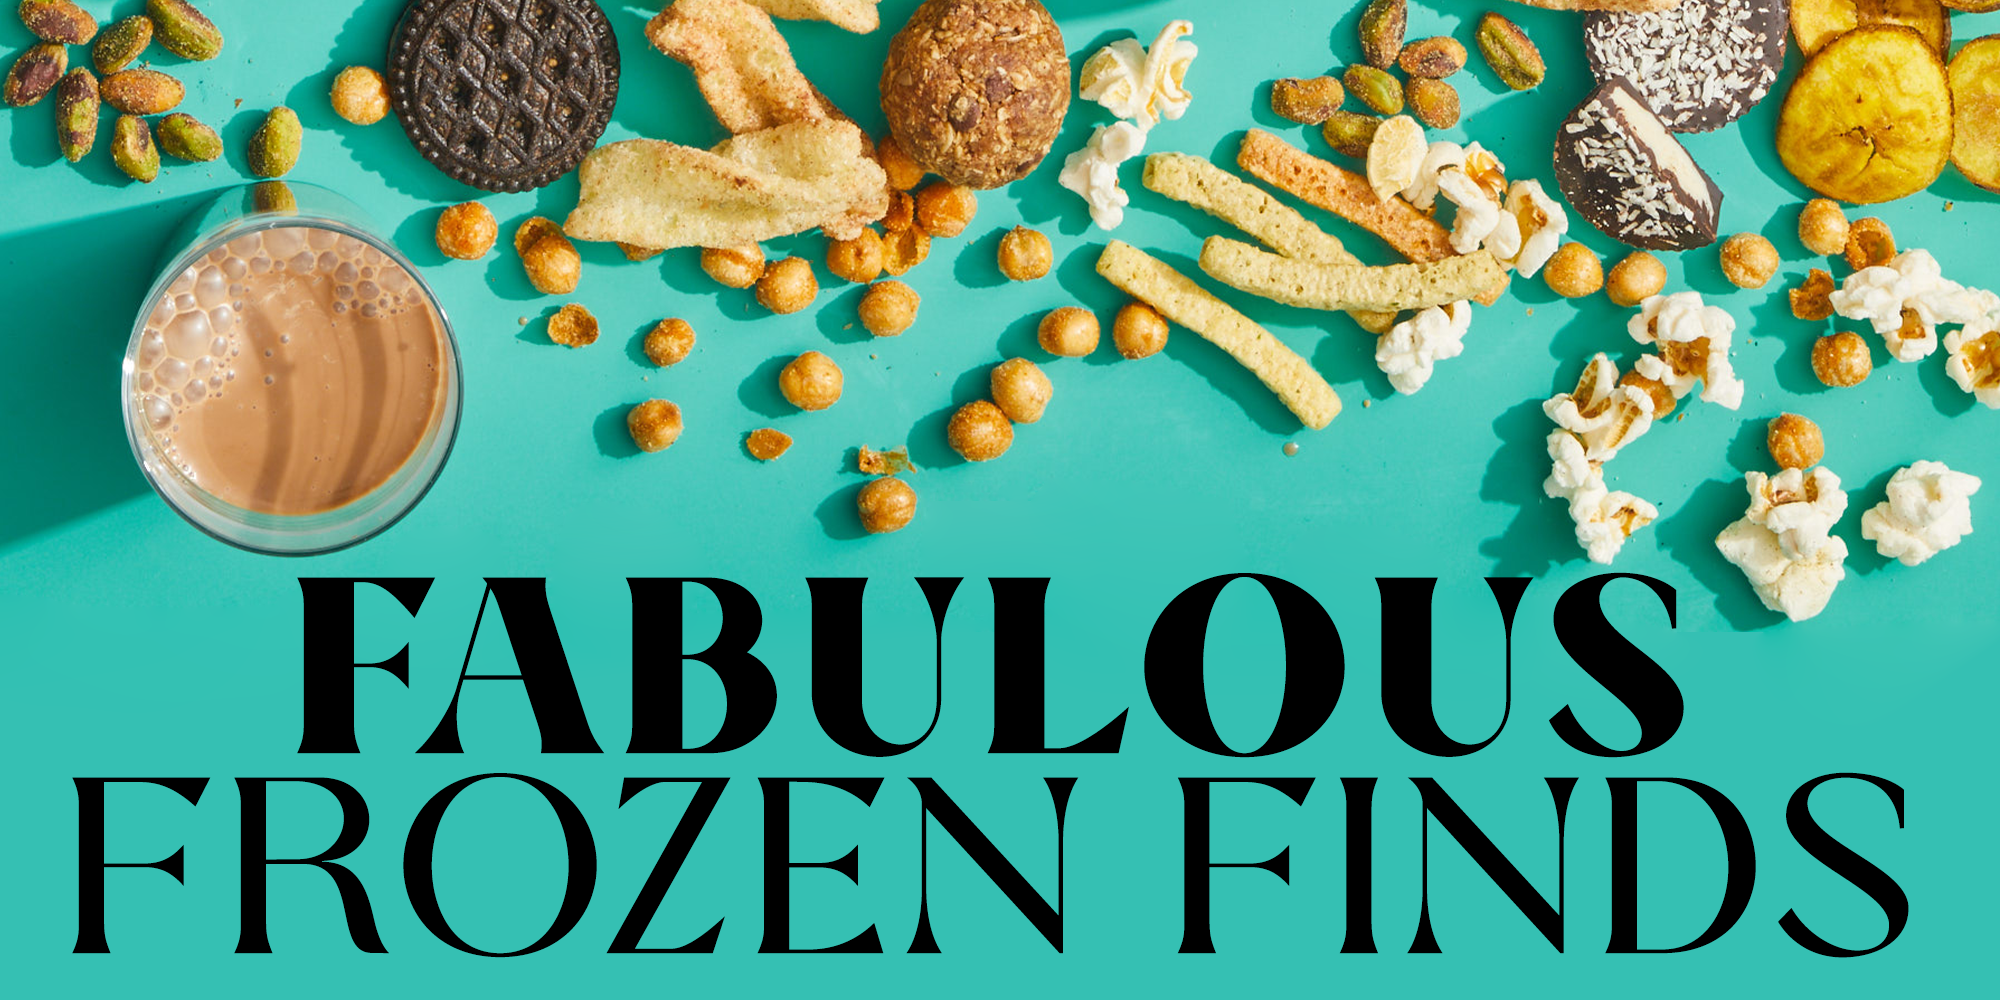 fabulous frozen finds